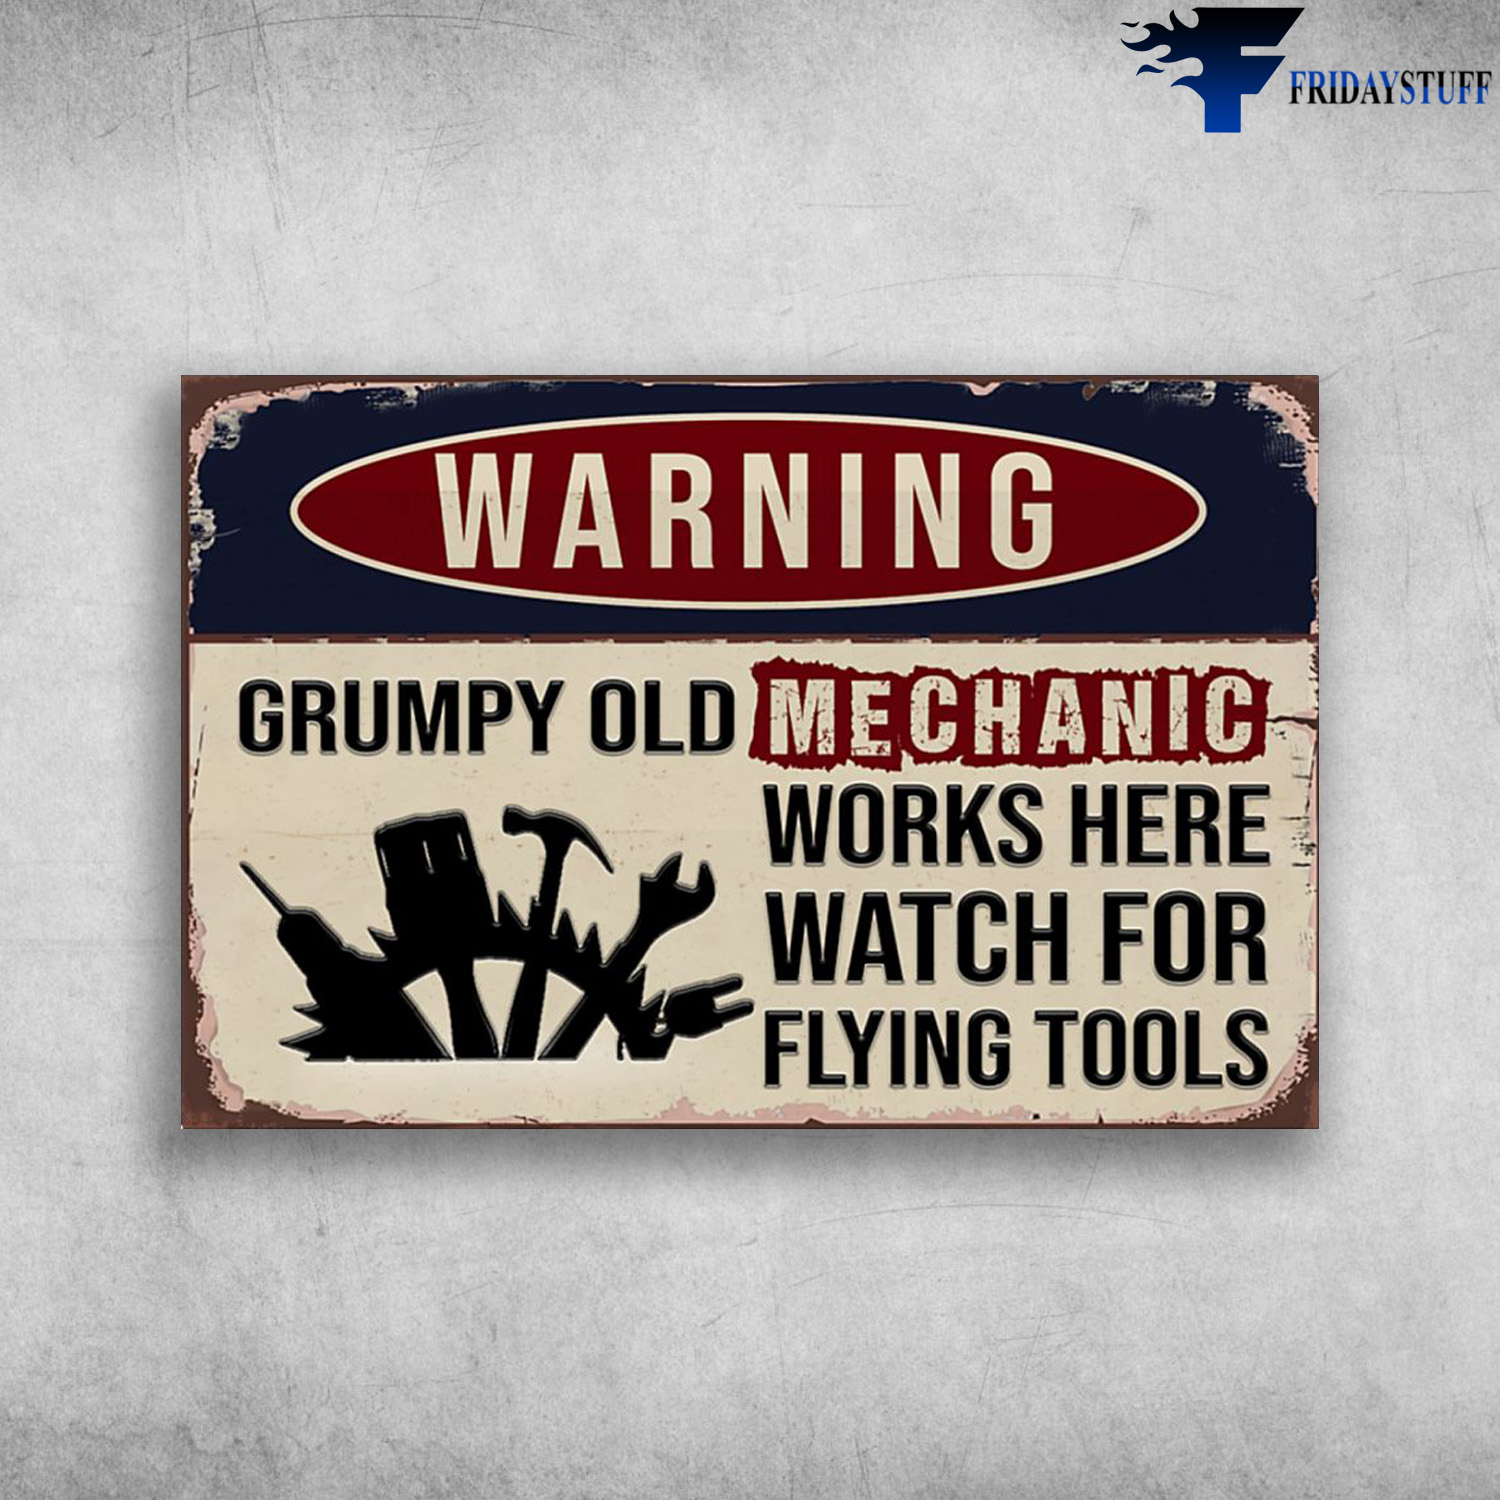 Grumpy Old Mechanic - Warning Grumpy Old Mechanic, Works Here Watch For Flying Tools